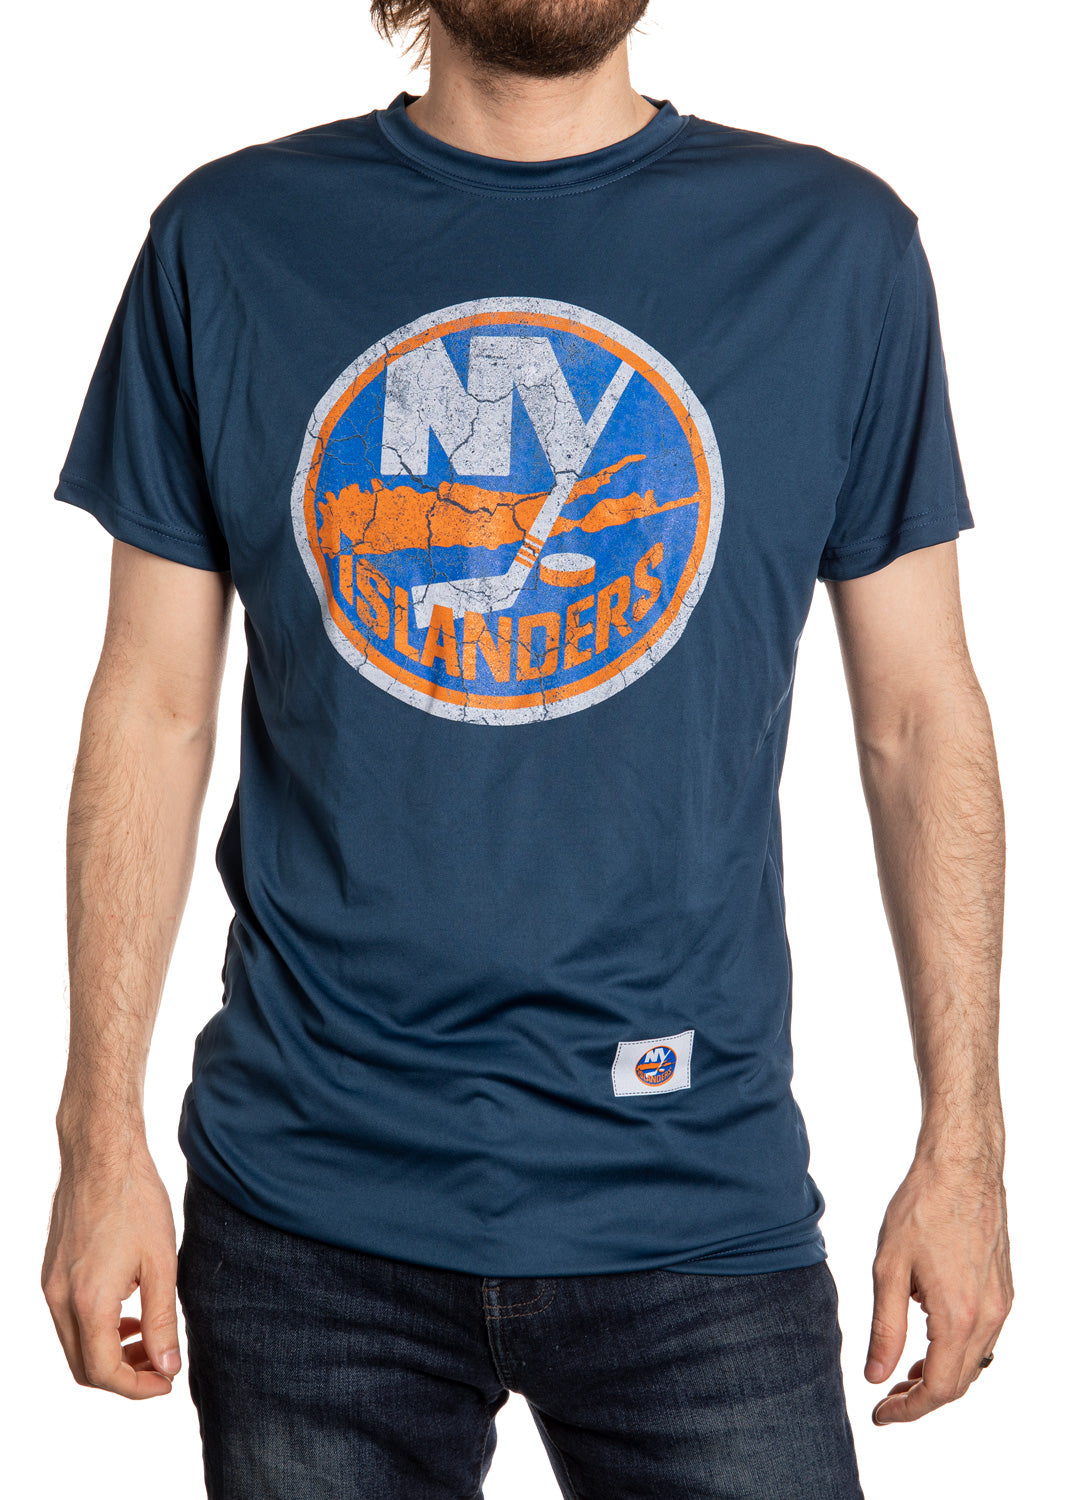 New York Islanders Short Sleeve Shirt Front View.